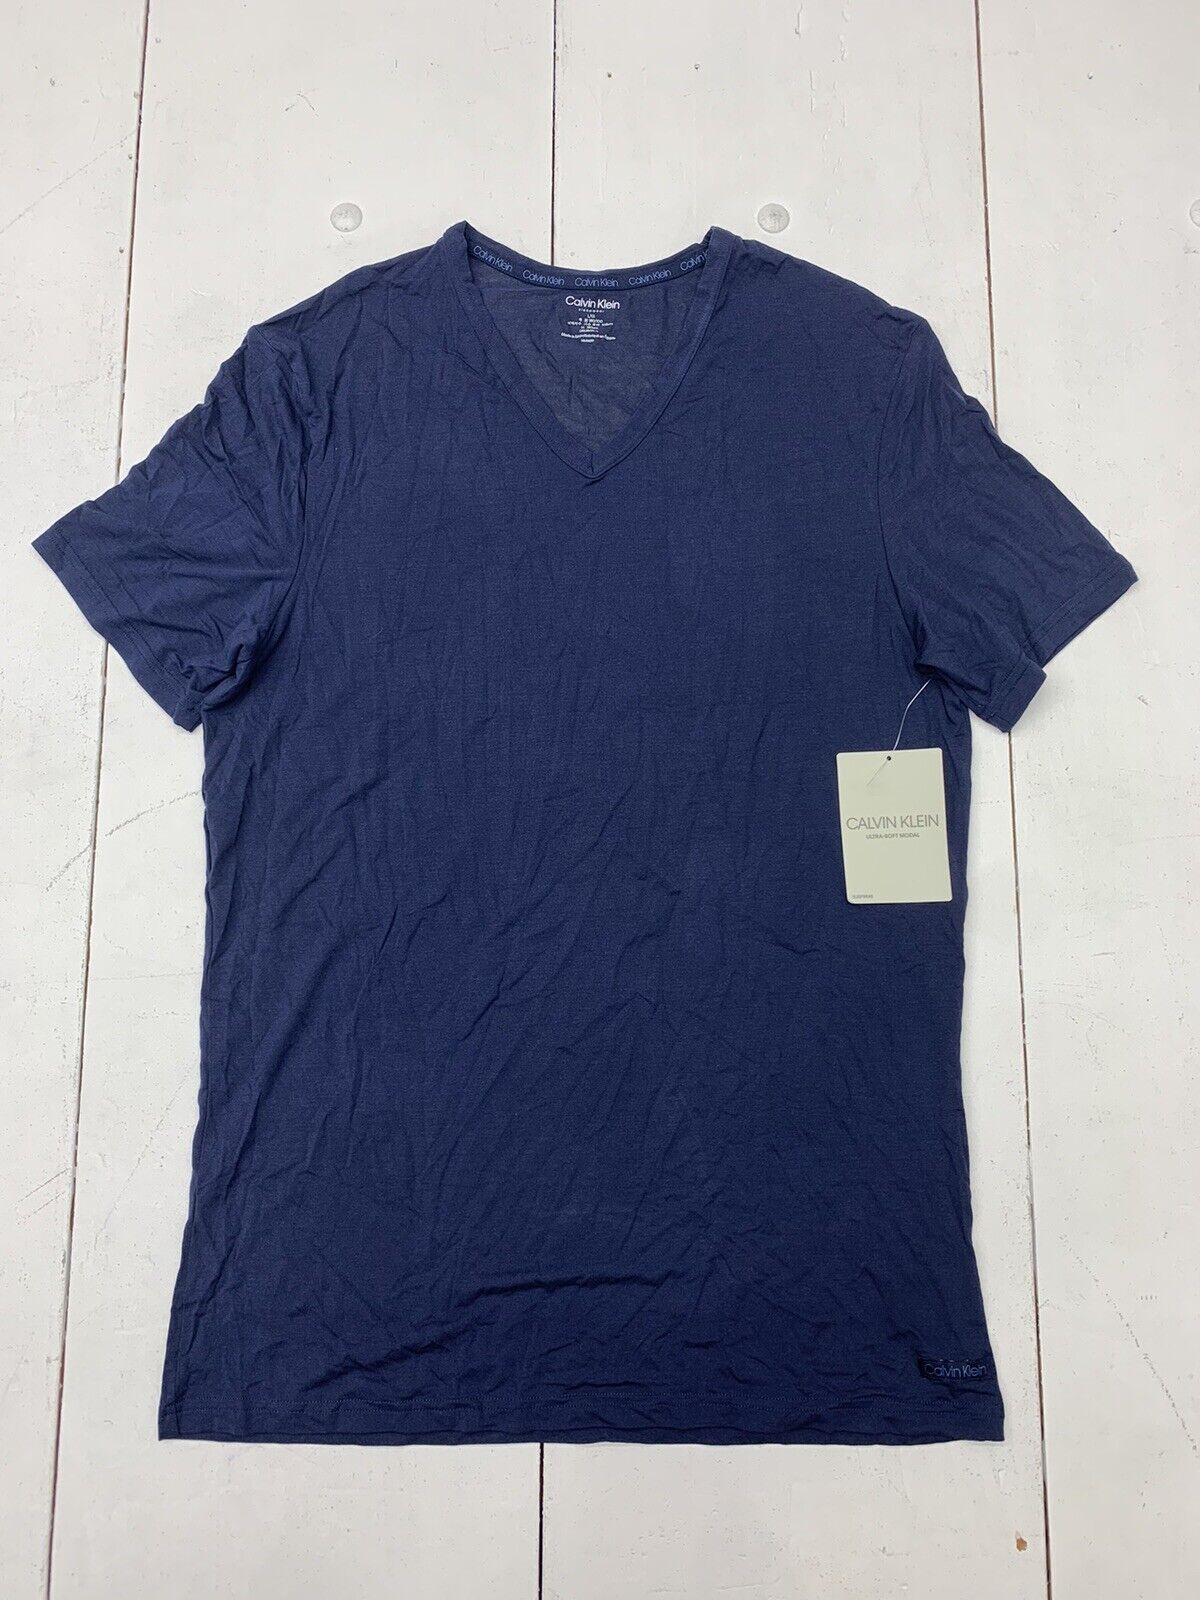 Calvin Klein Womens Dark Blue Sleep Shirt Size Large